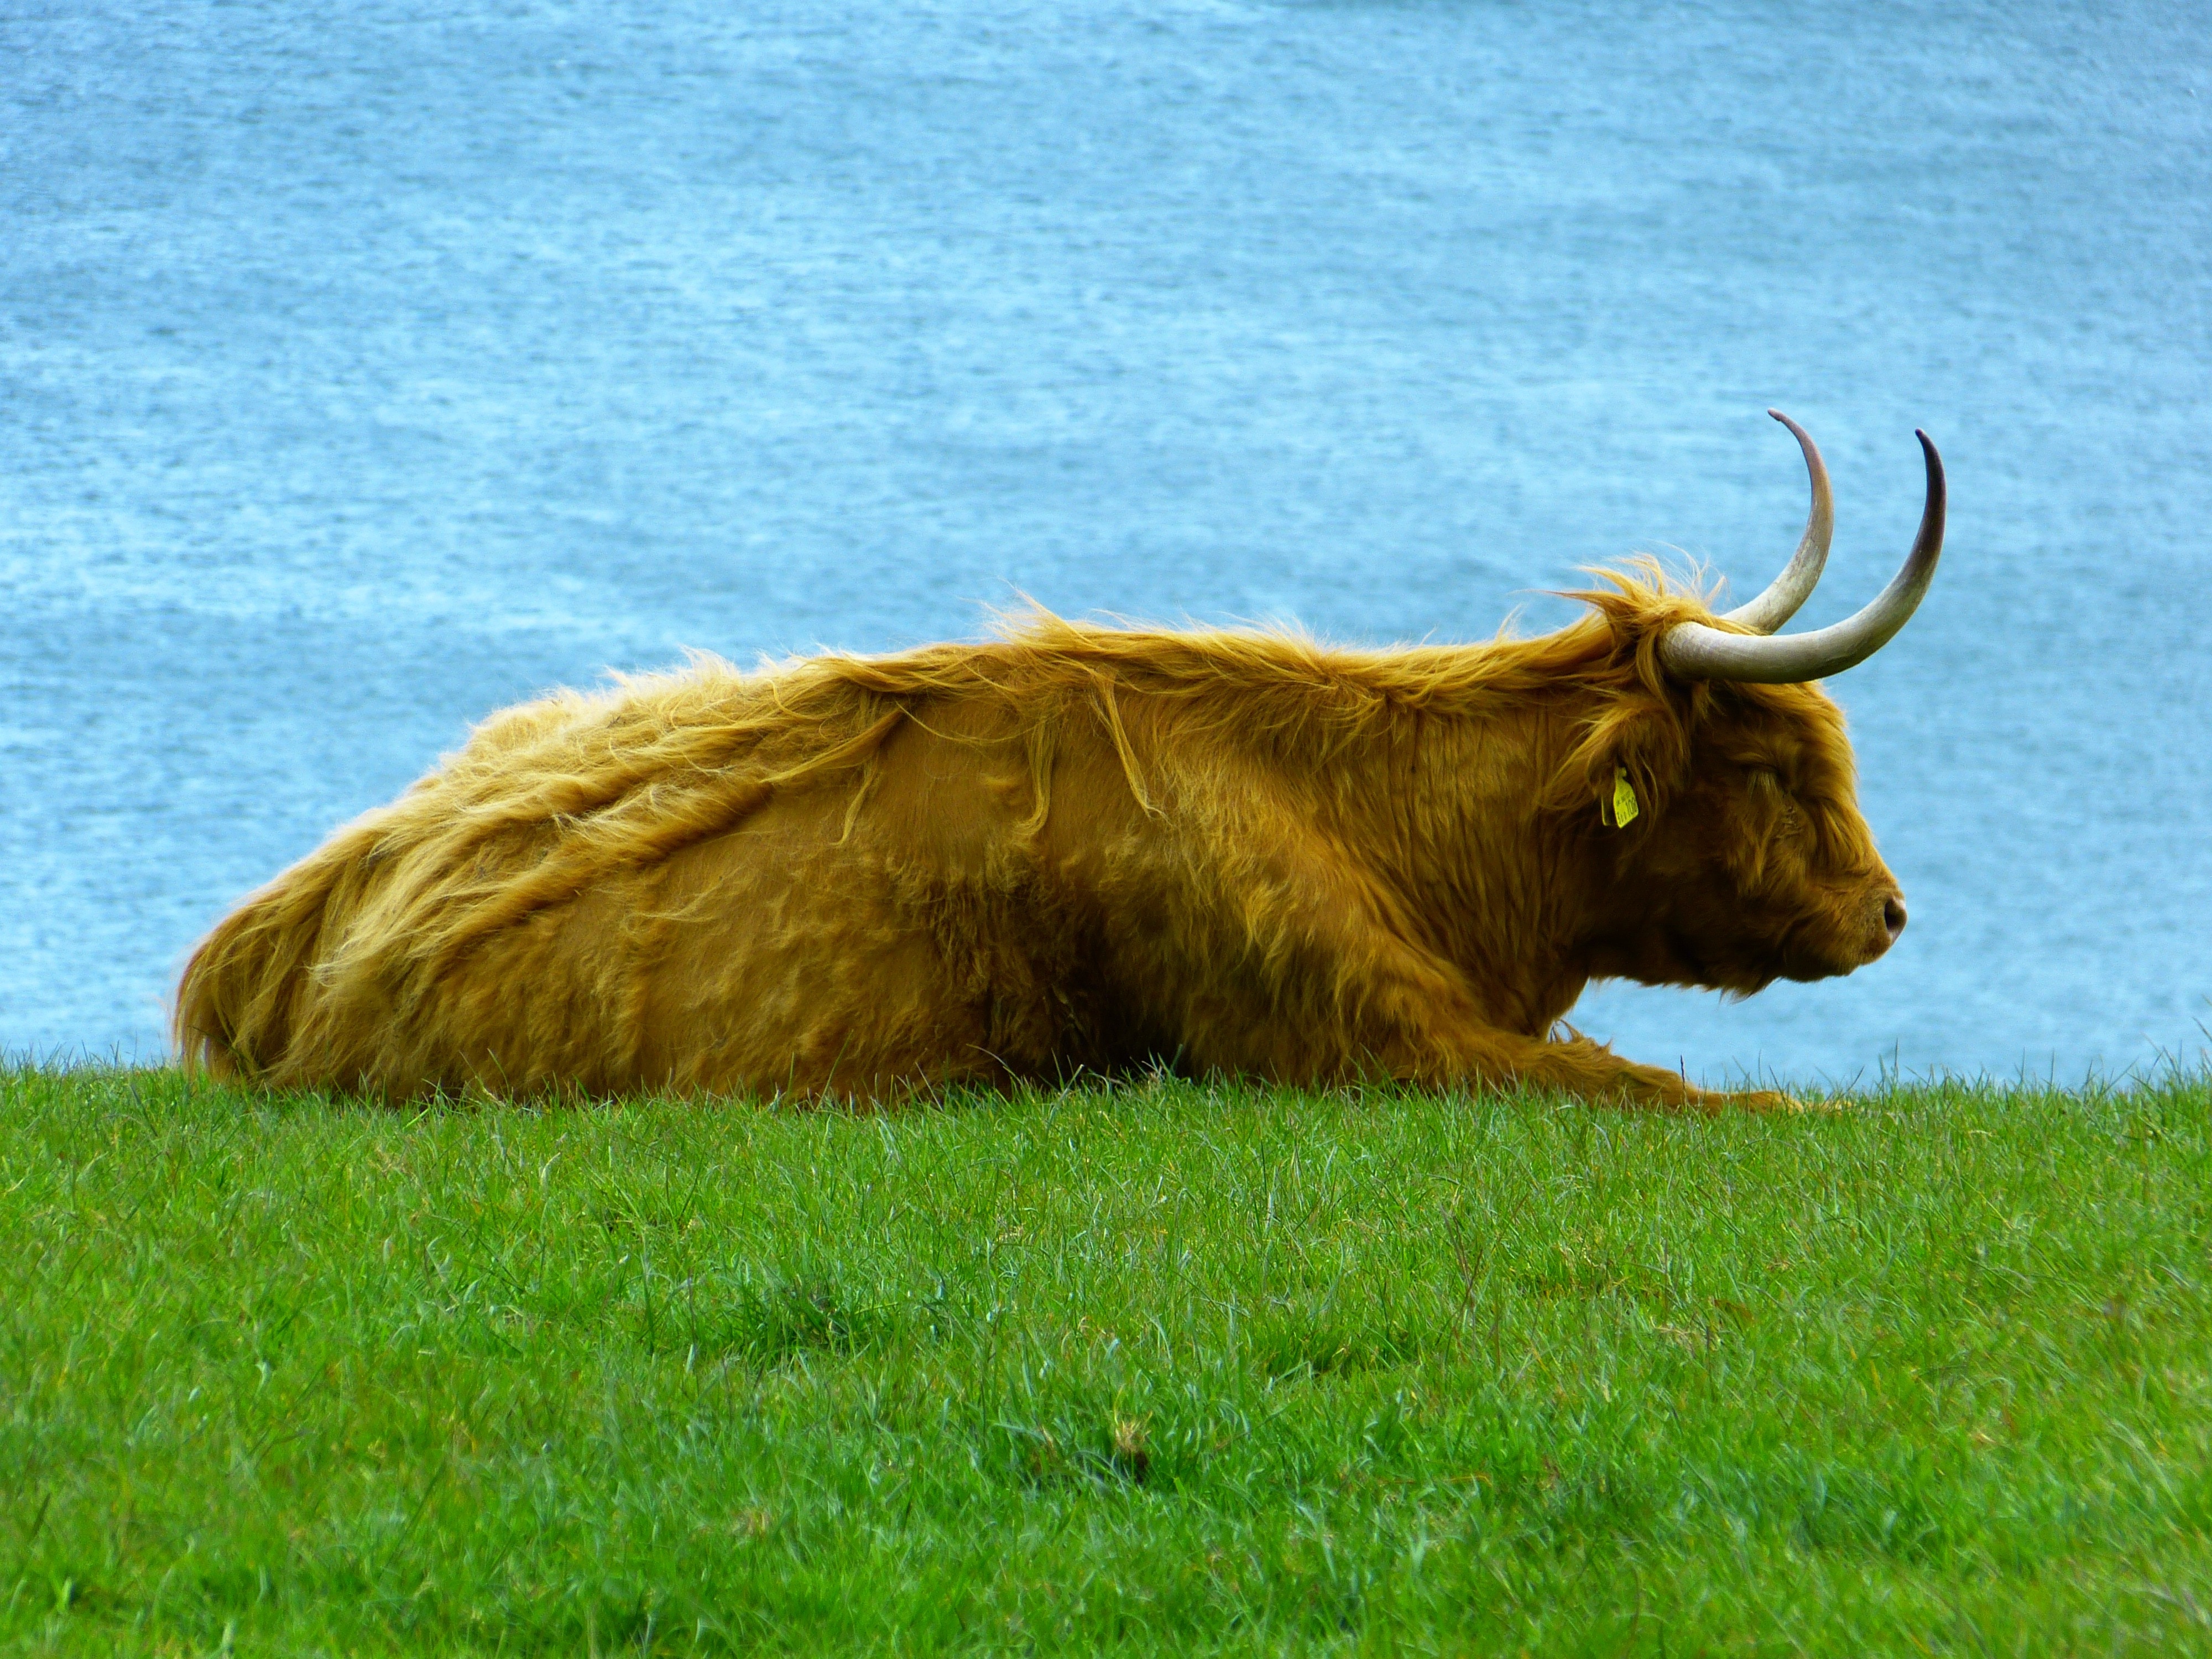 Highland Beef, Highland Cattle, Kyloe, one animal, grass